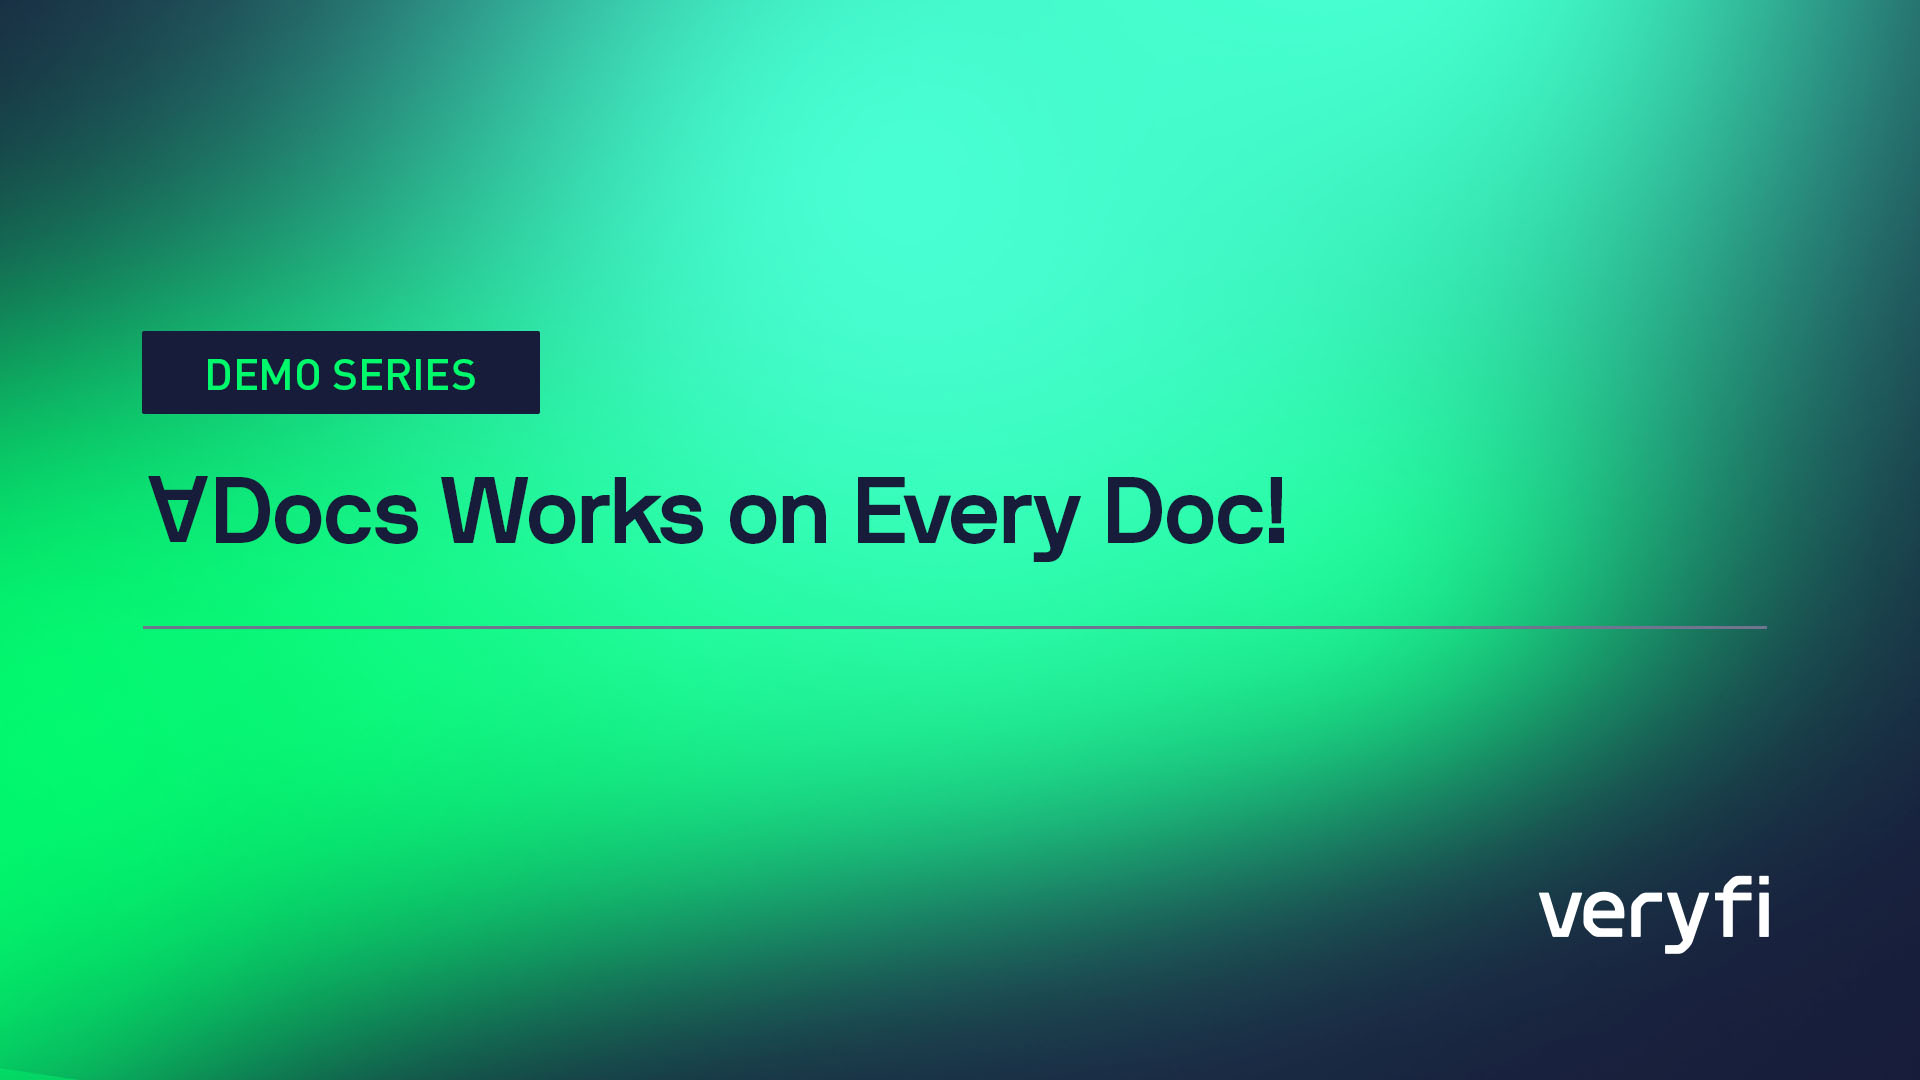 ∀Docs extracts any document